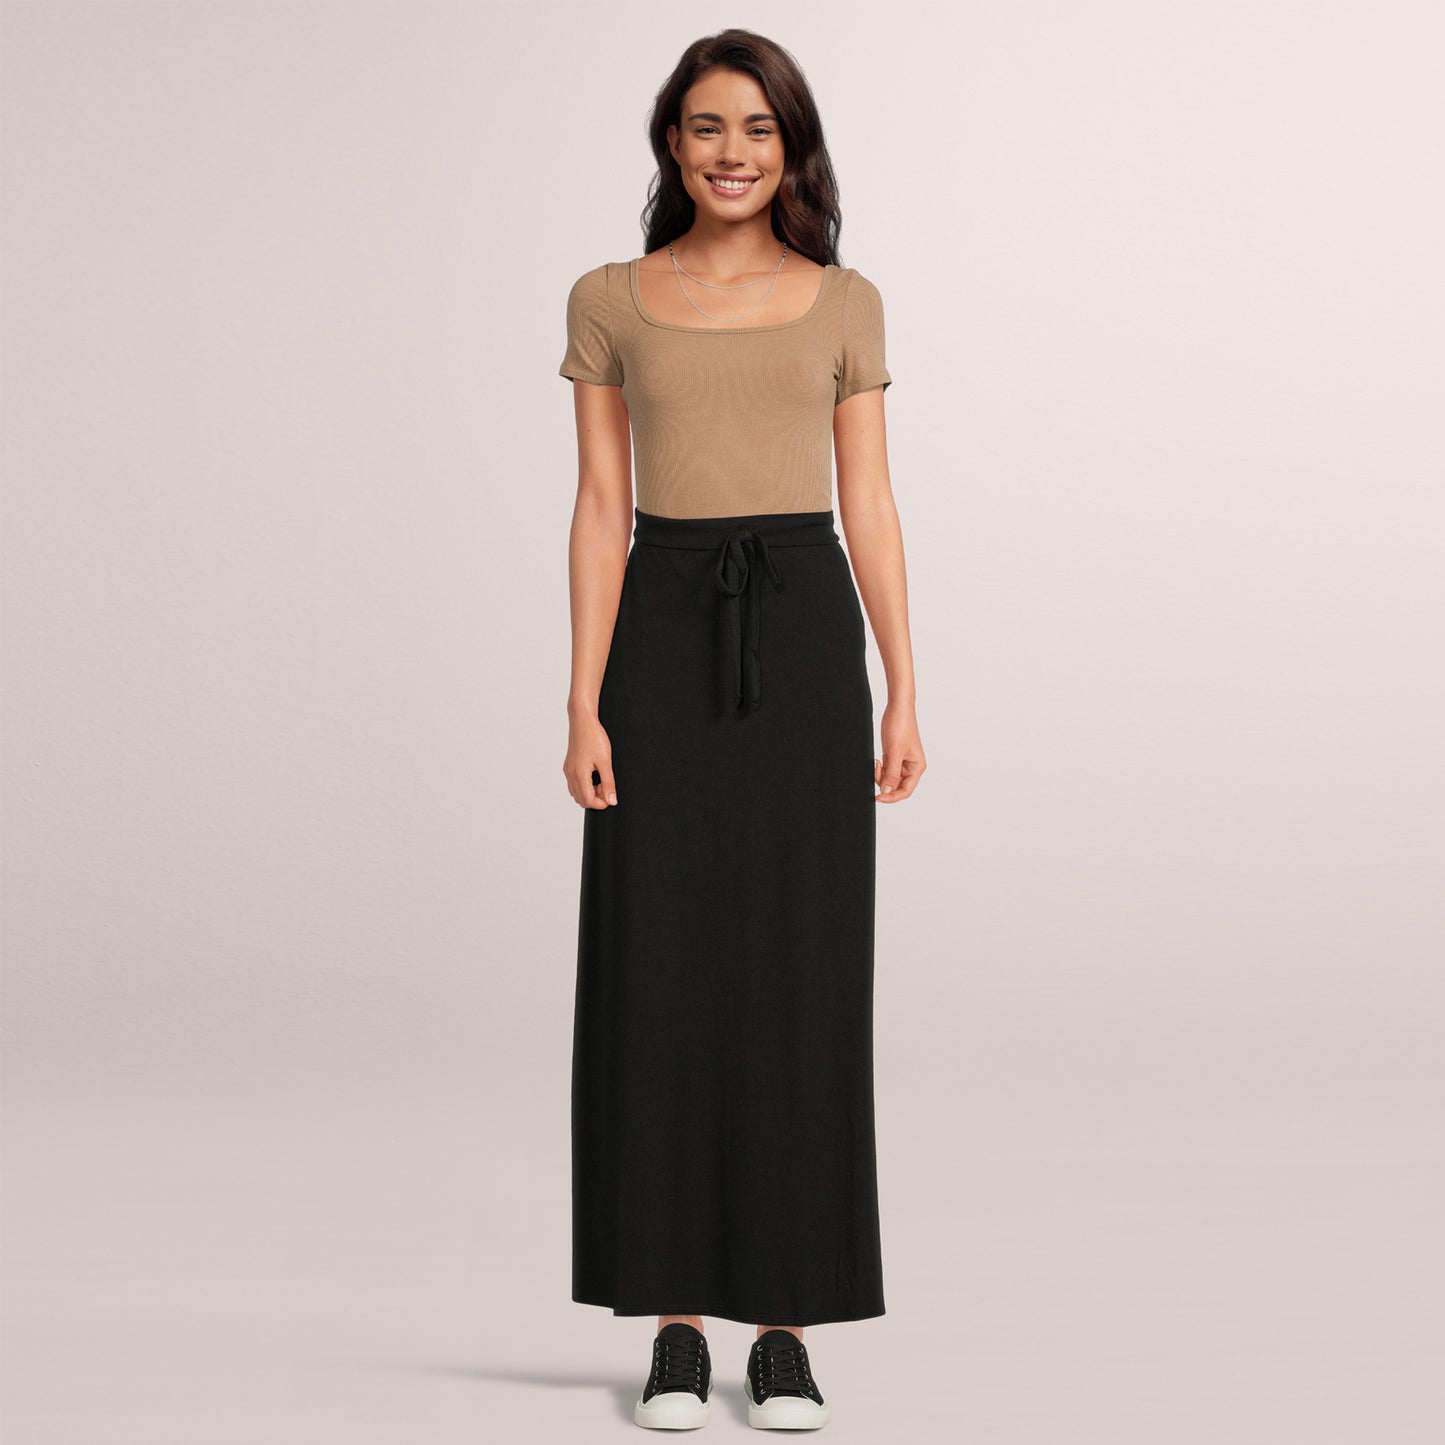 Women's Maxi Long Skirt Drawstring Waist Pockets Soft Comfort Fabric Black